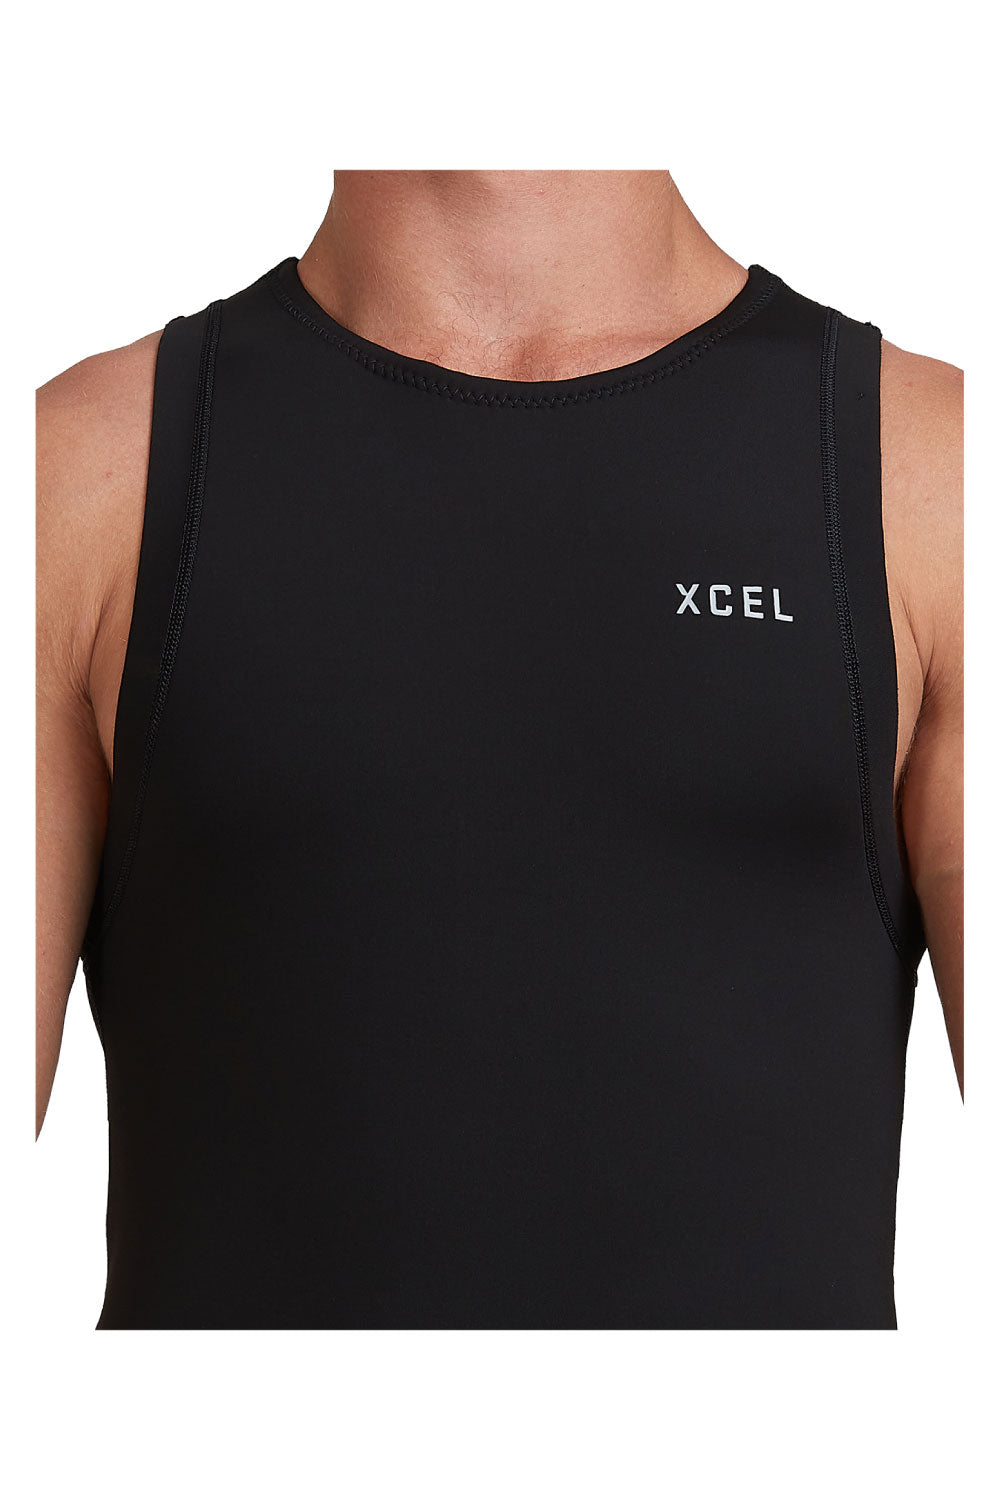 XCEL AXIS 1mm Surfing Vest